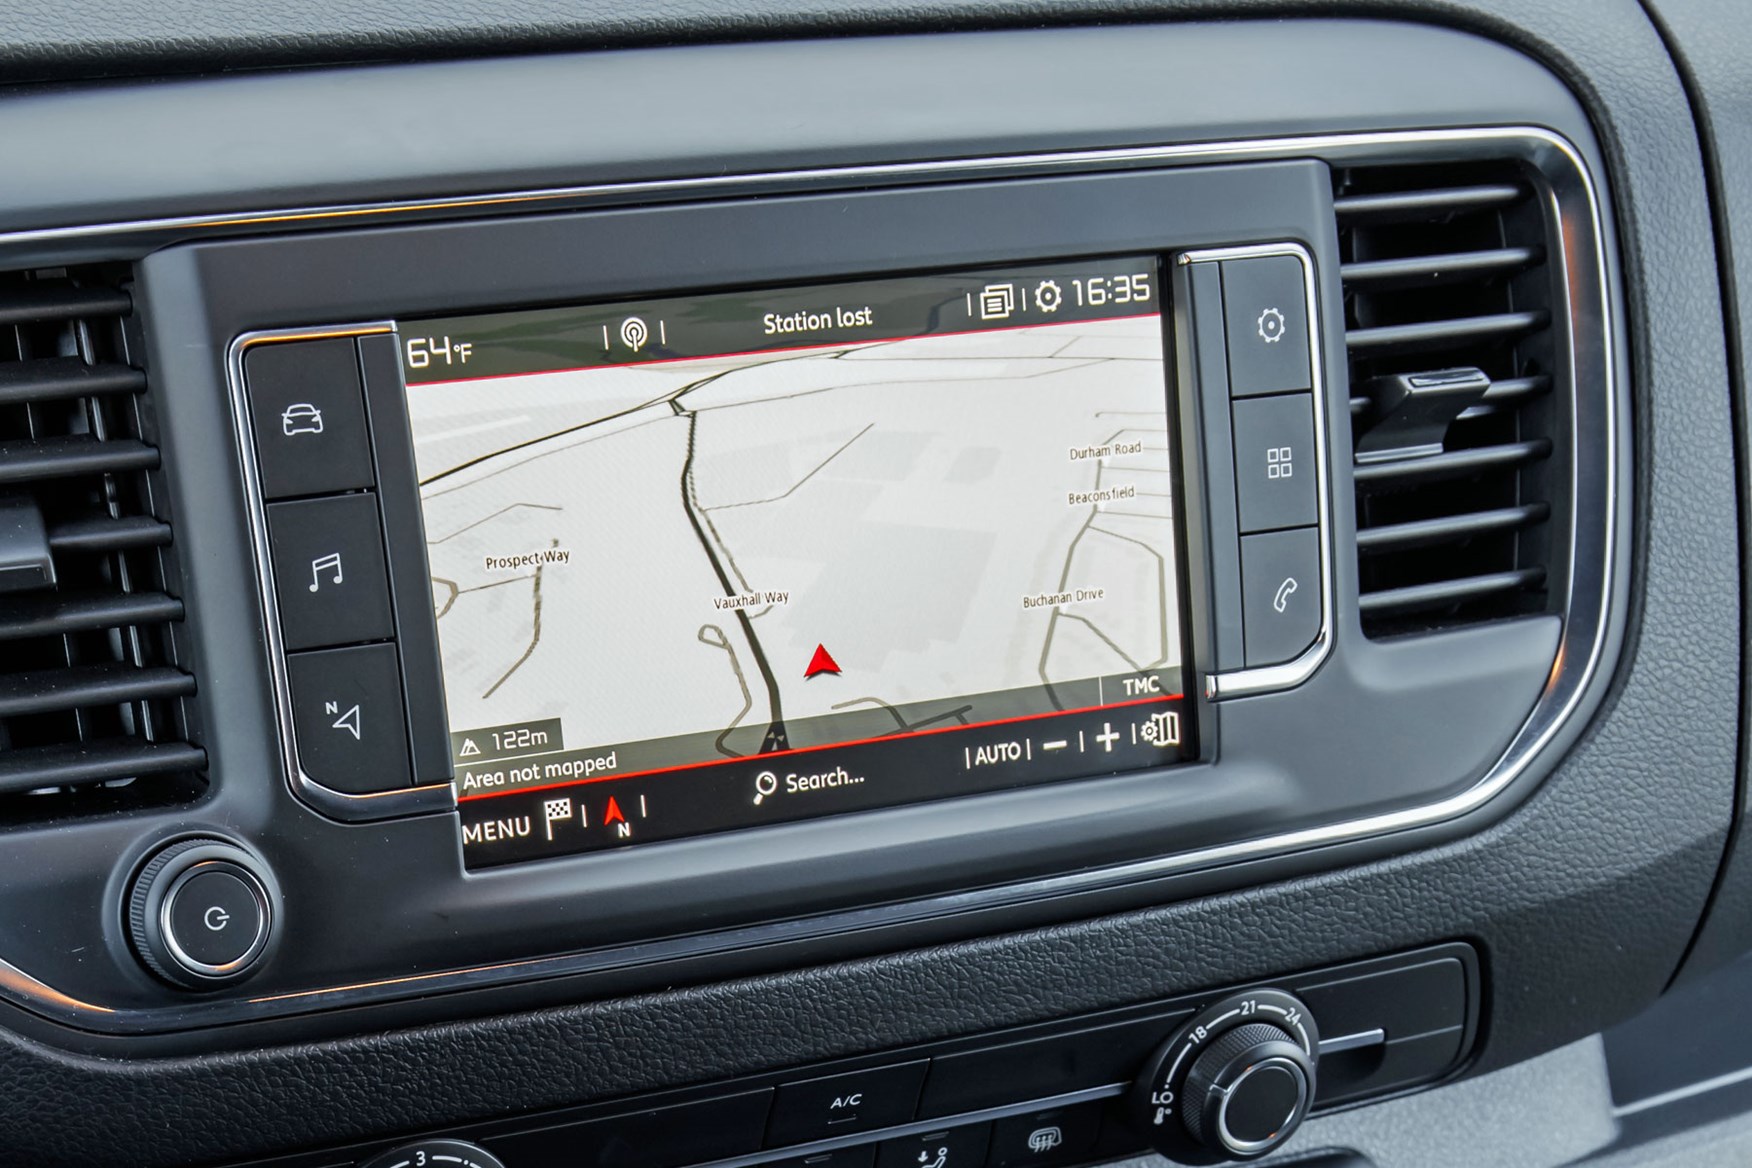 Vauxhall Vivaro review - top-spec infotainment system with sat-nav